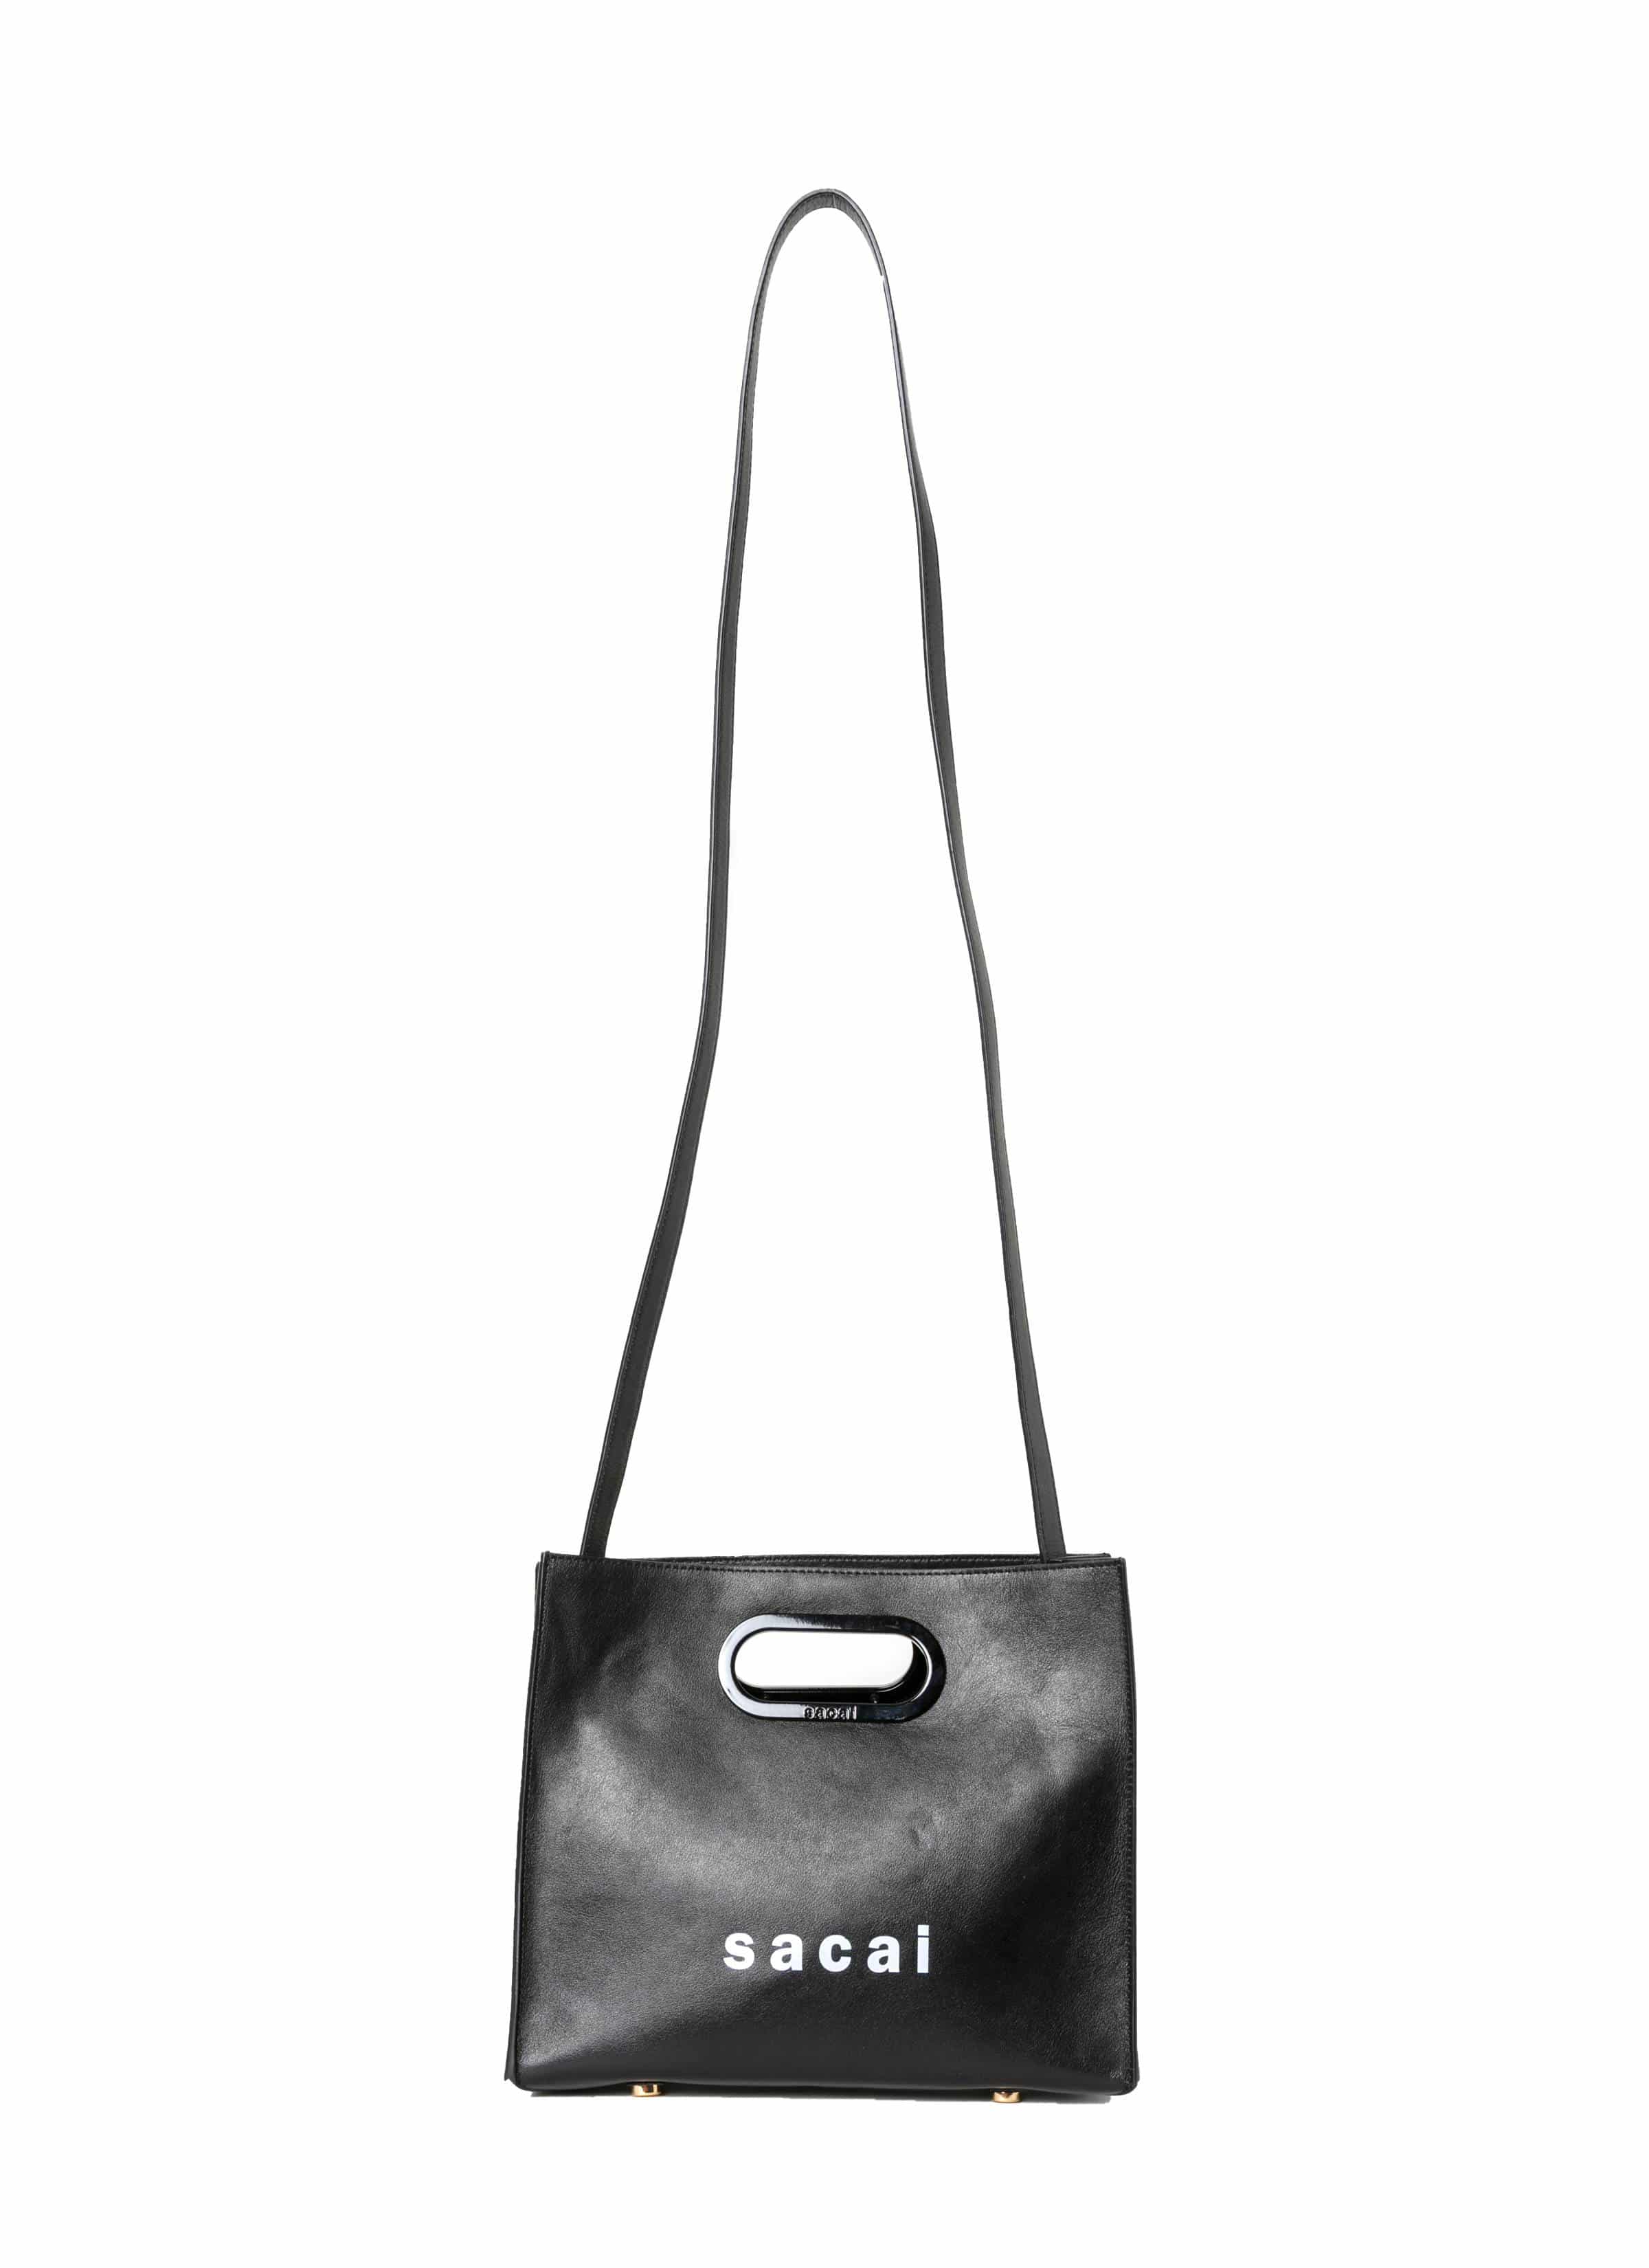 sacai オンラインストア / sacai THE storeNew Shopper Bag Small